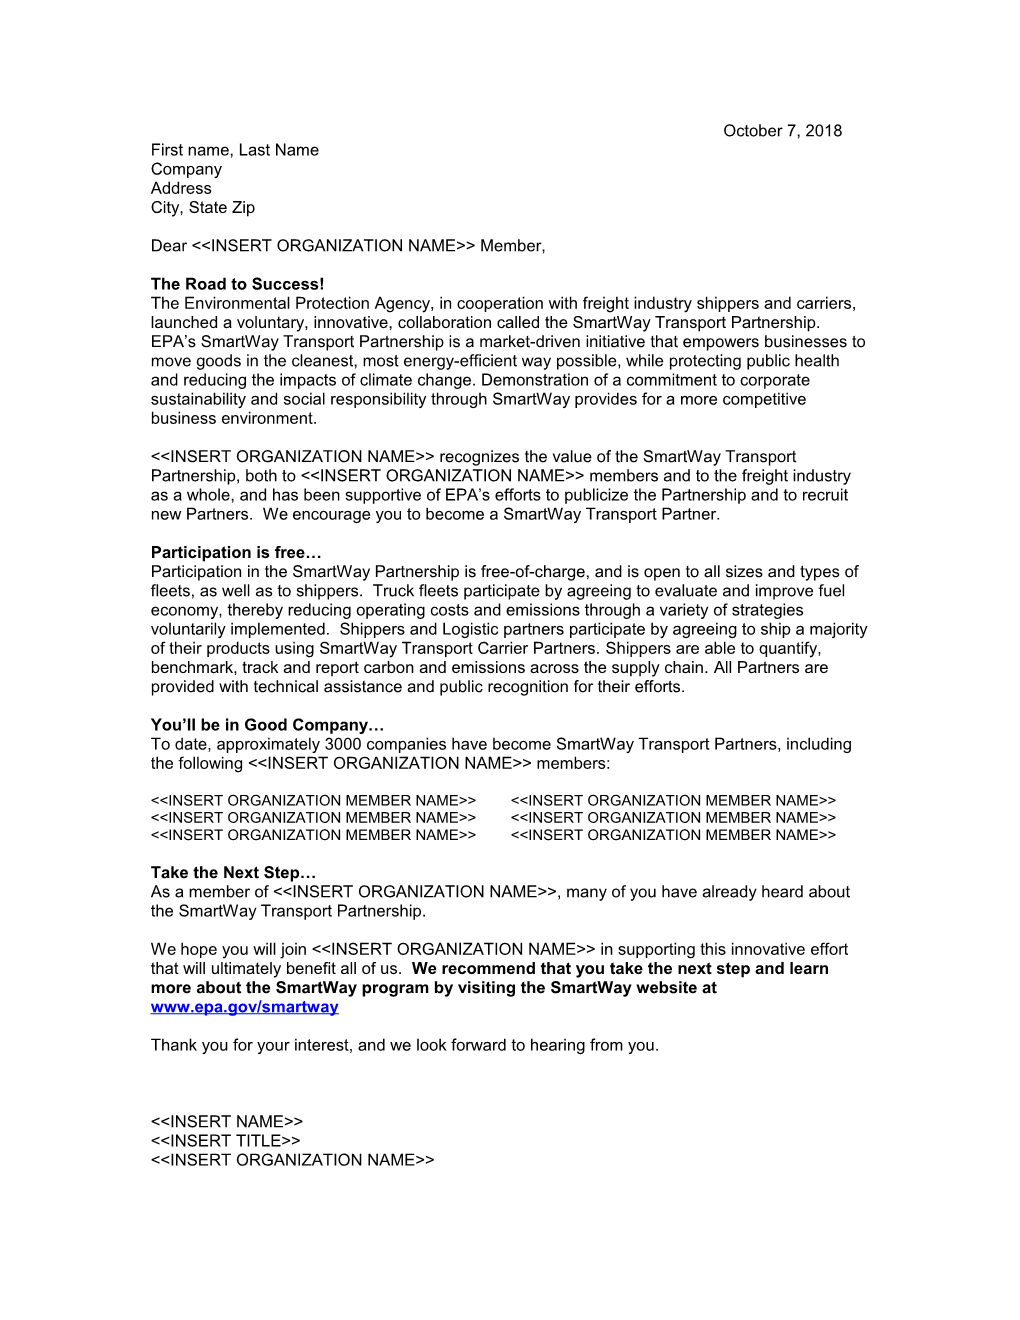 Smartway Affiliate Organization Template - Letter (August 2014)